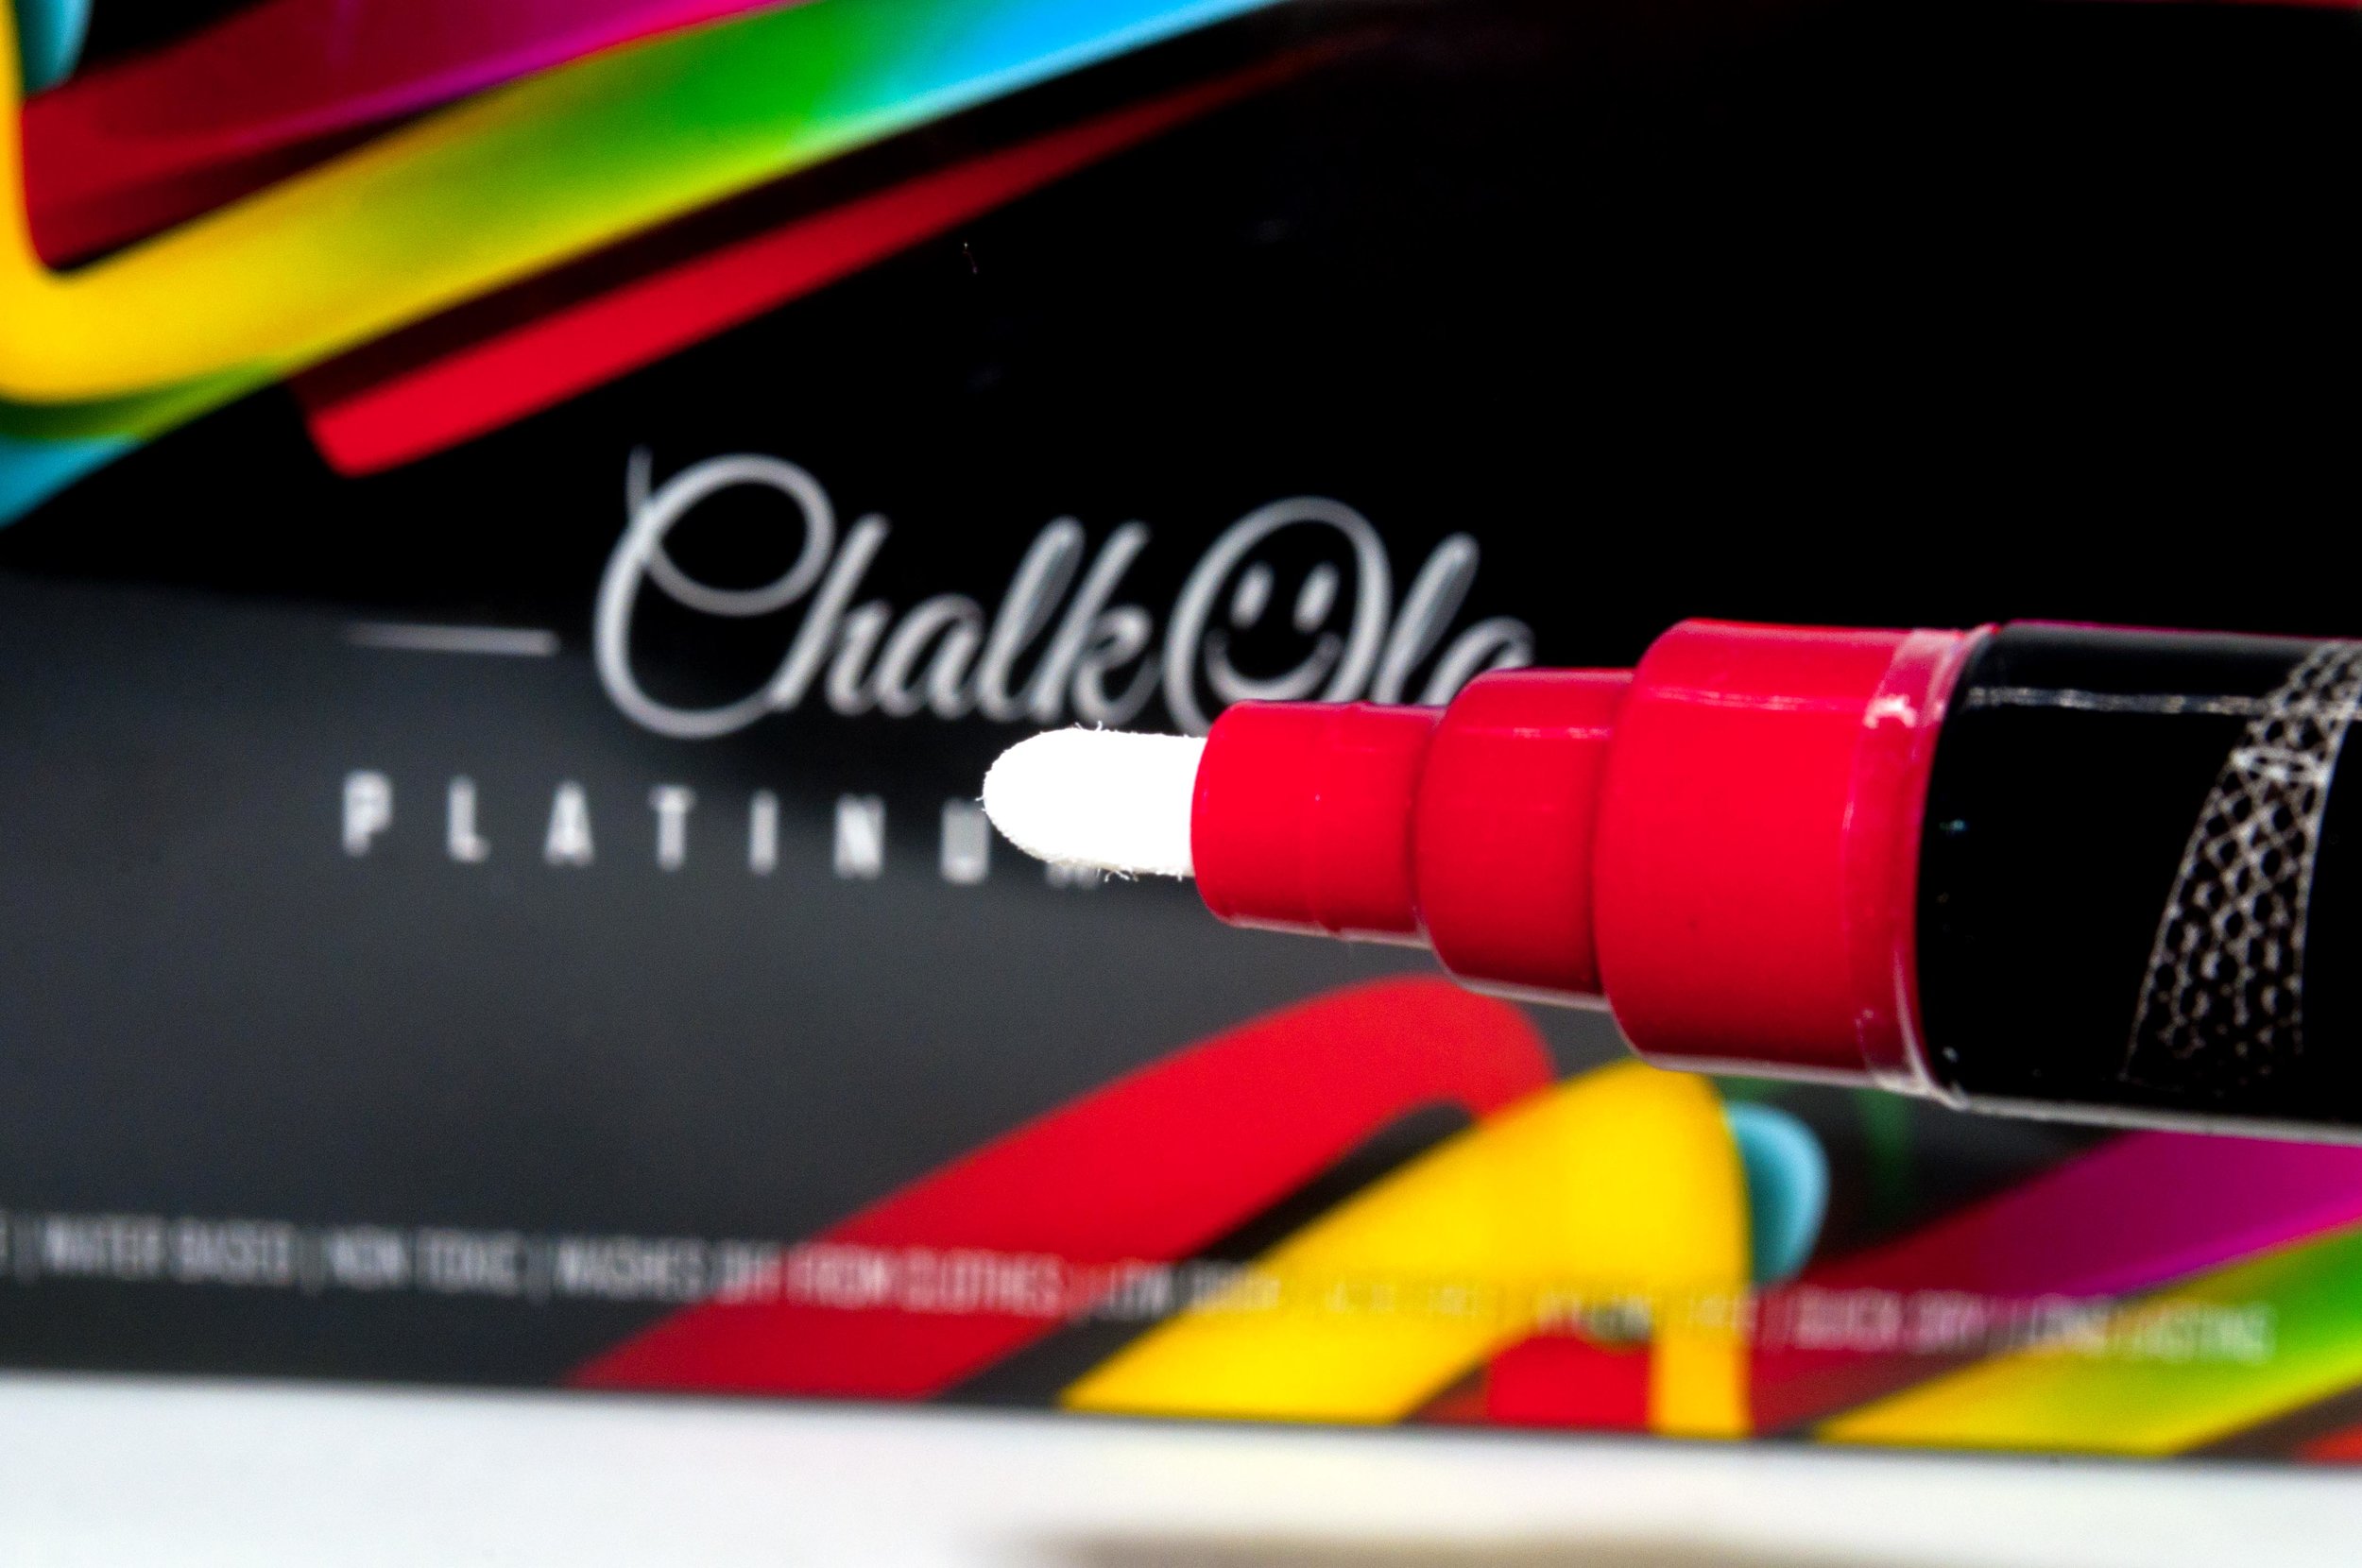 Chalk Ola Chalk Markers — The Art Gear Guide